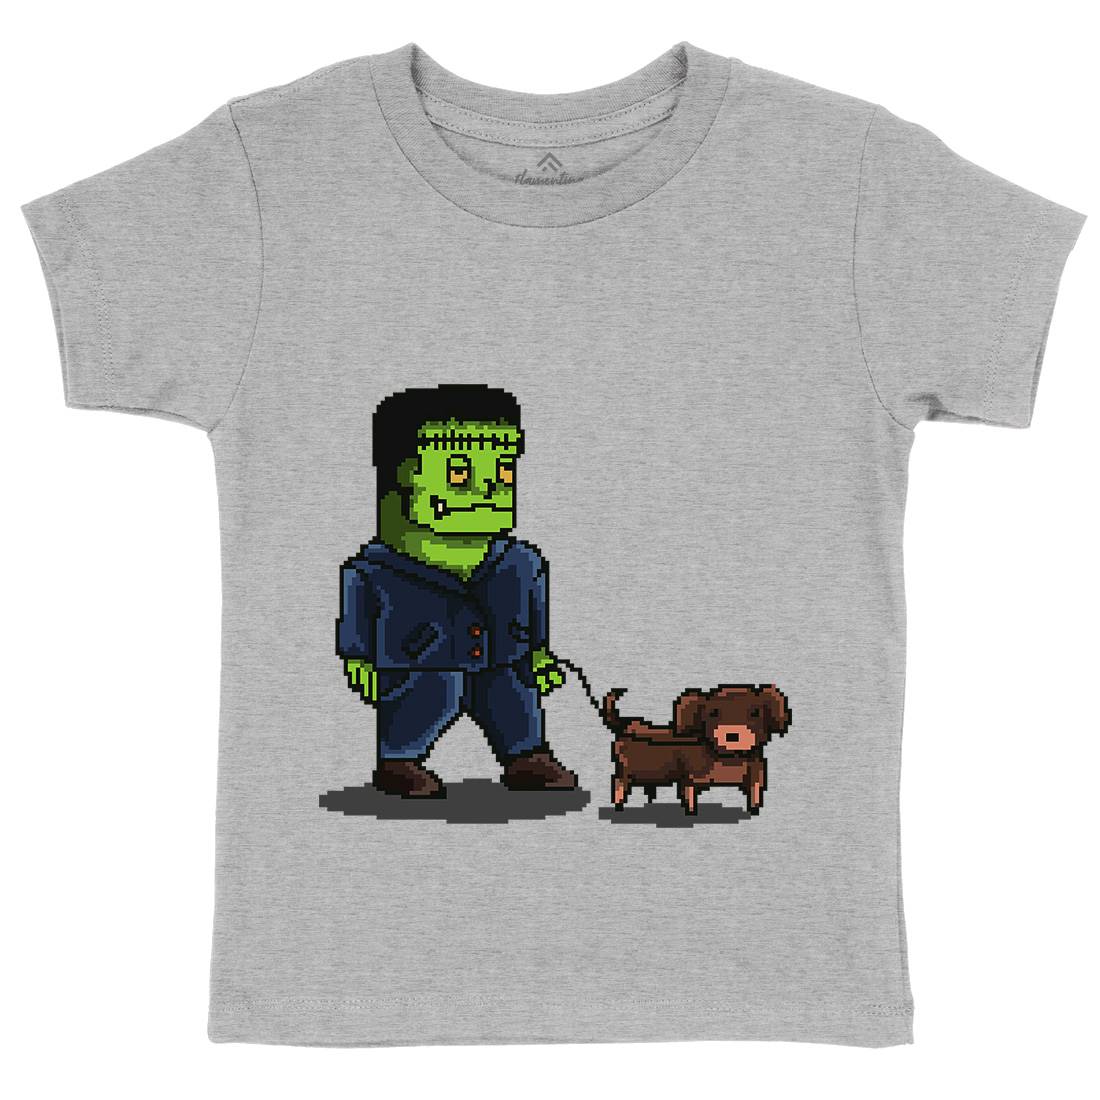 Franken Dog Kids Crew Neck T-Shirt Food B898